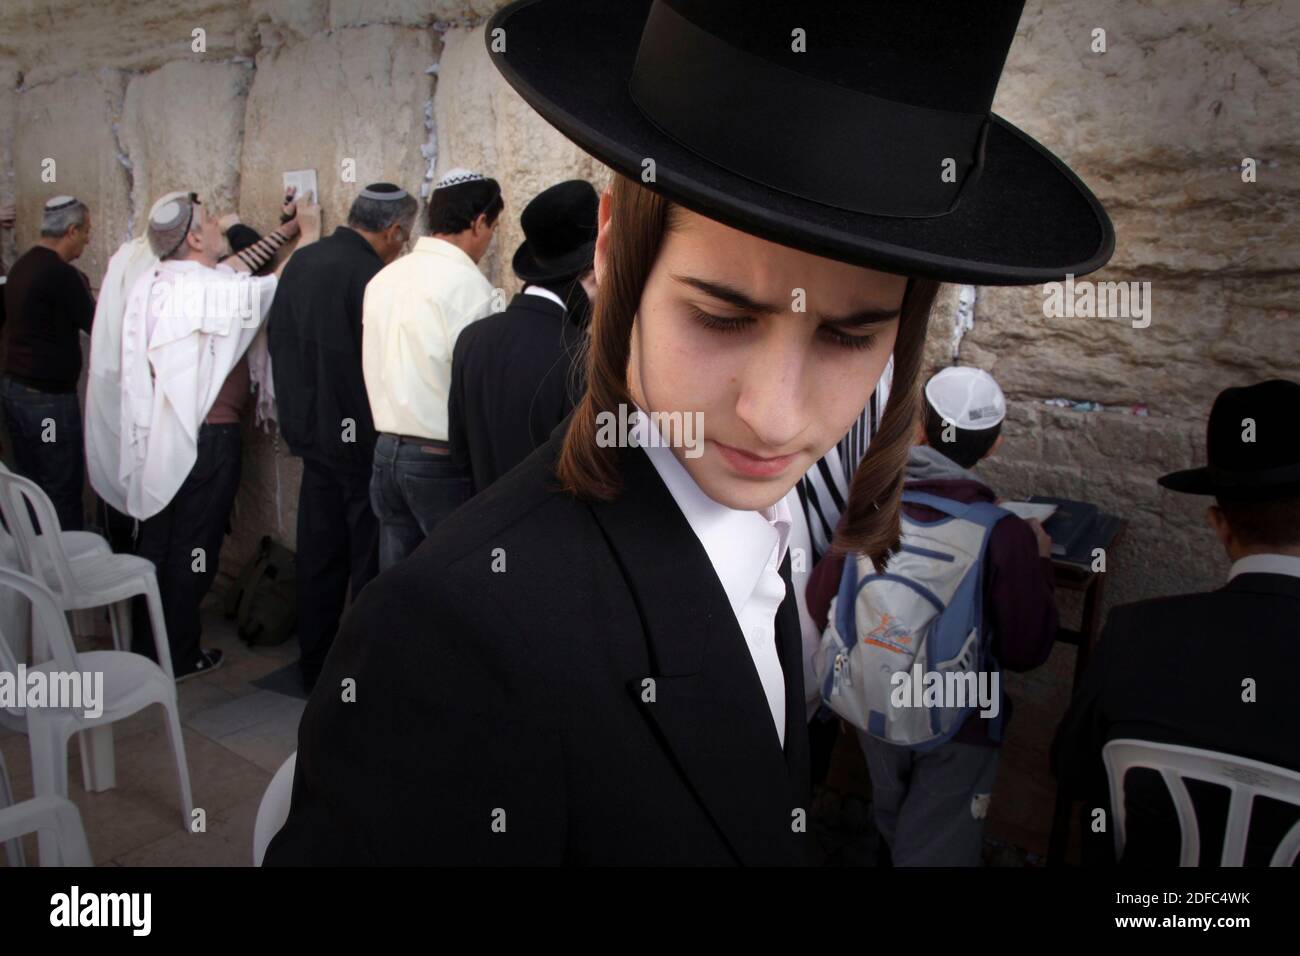 Israel, Jerusalem, Western Wall, hardedim man (ultra orthodox Jew) at the Western Wall Stock Photo